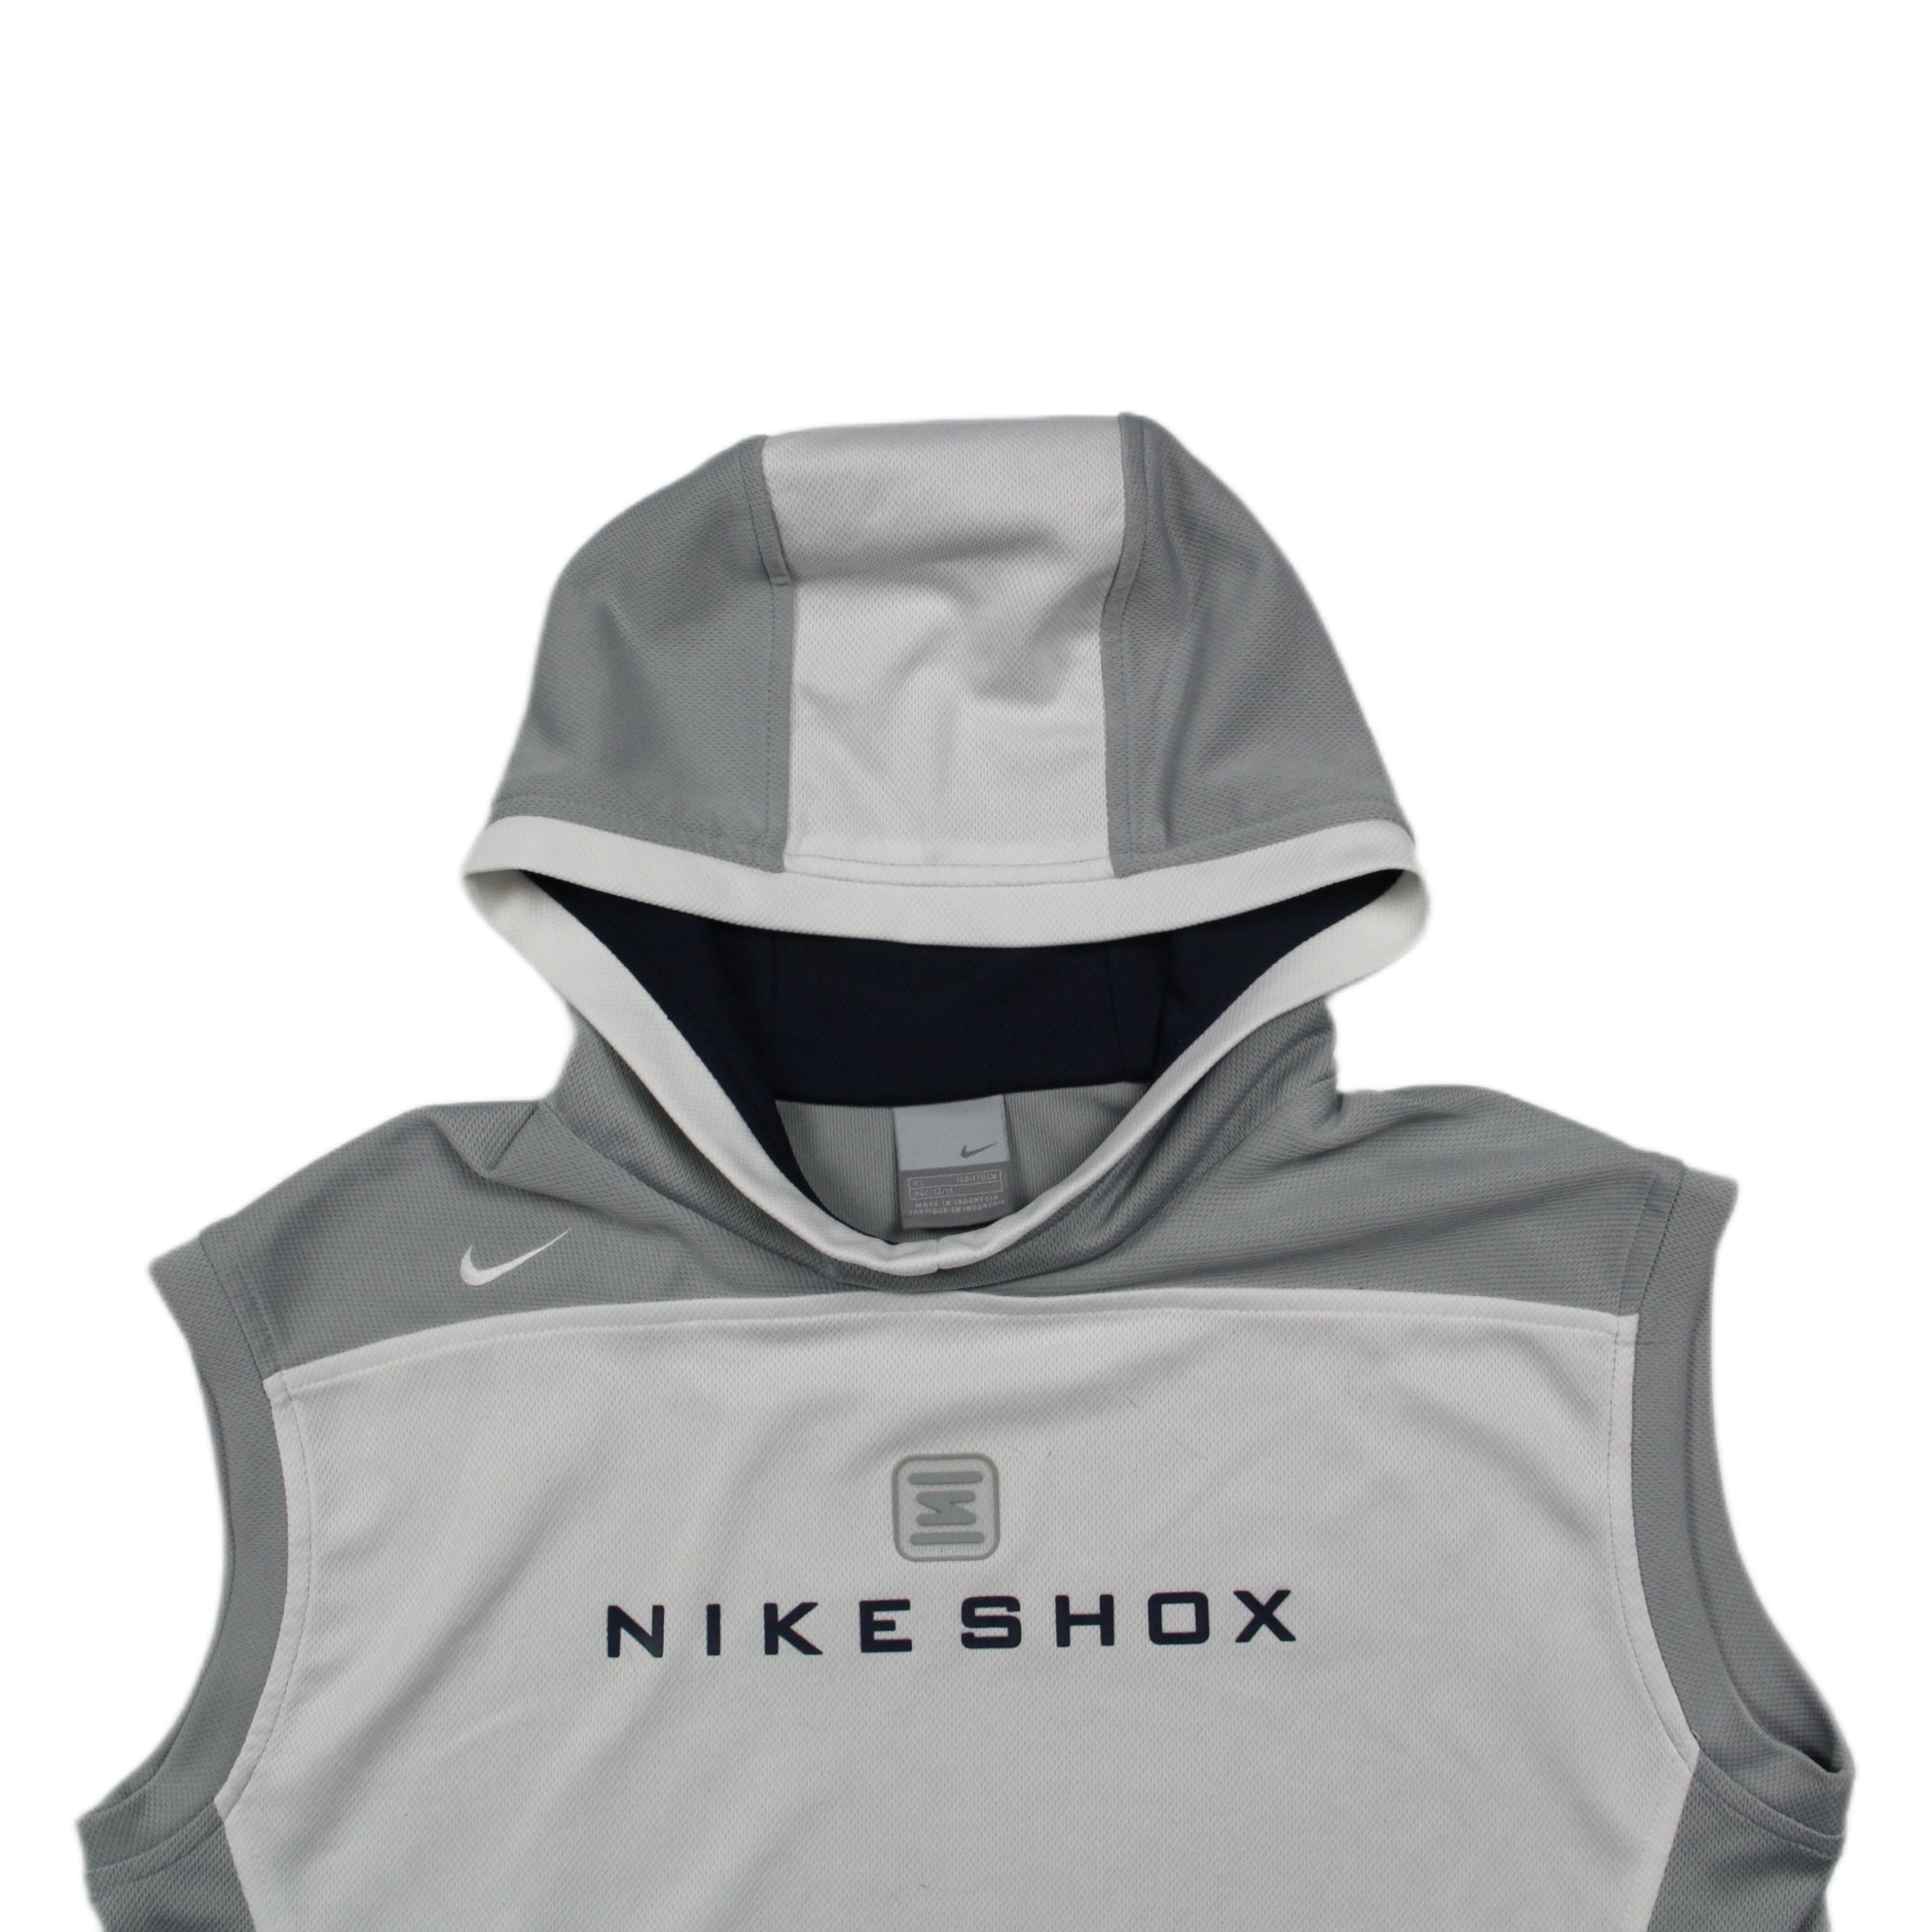 Nike Shox Hooded Tanktop white grey neon green ...